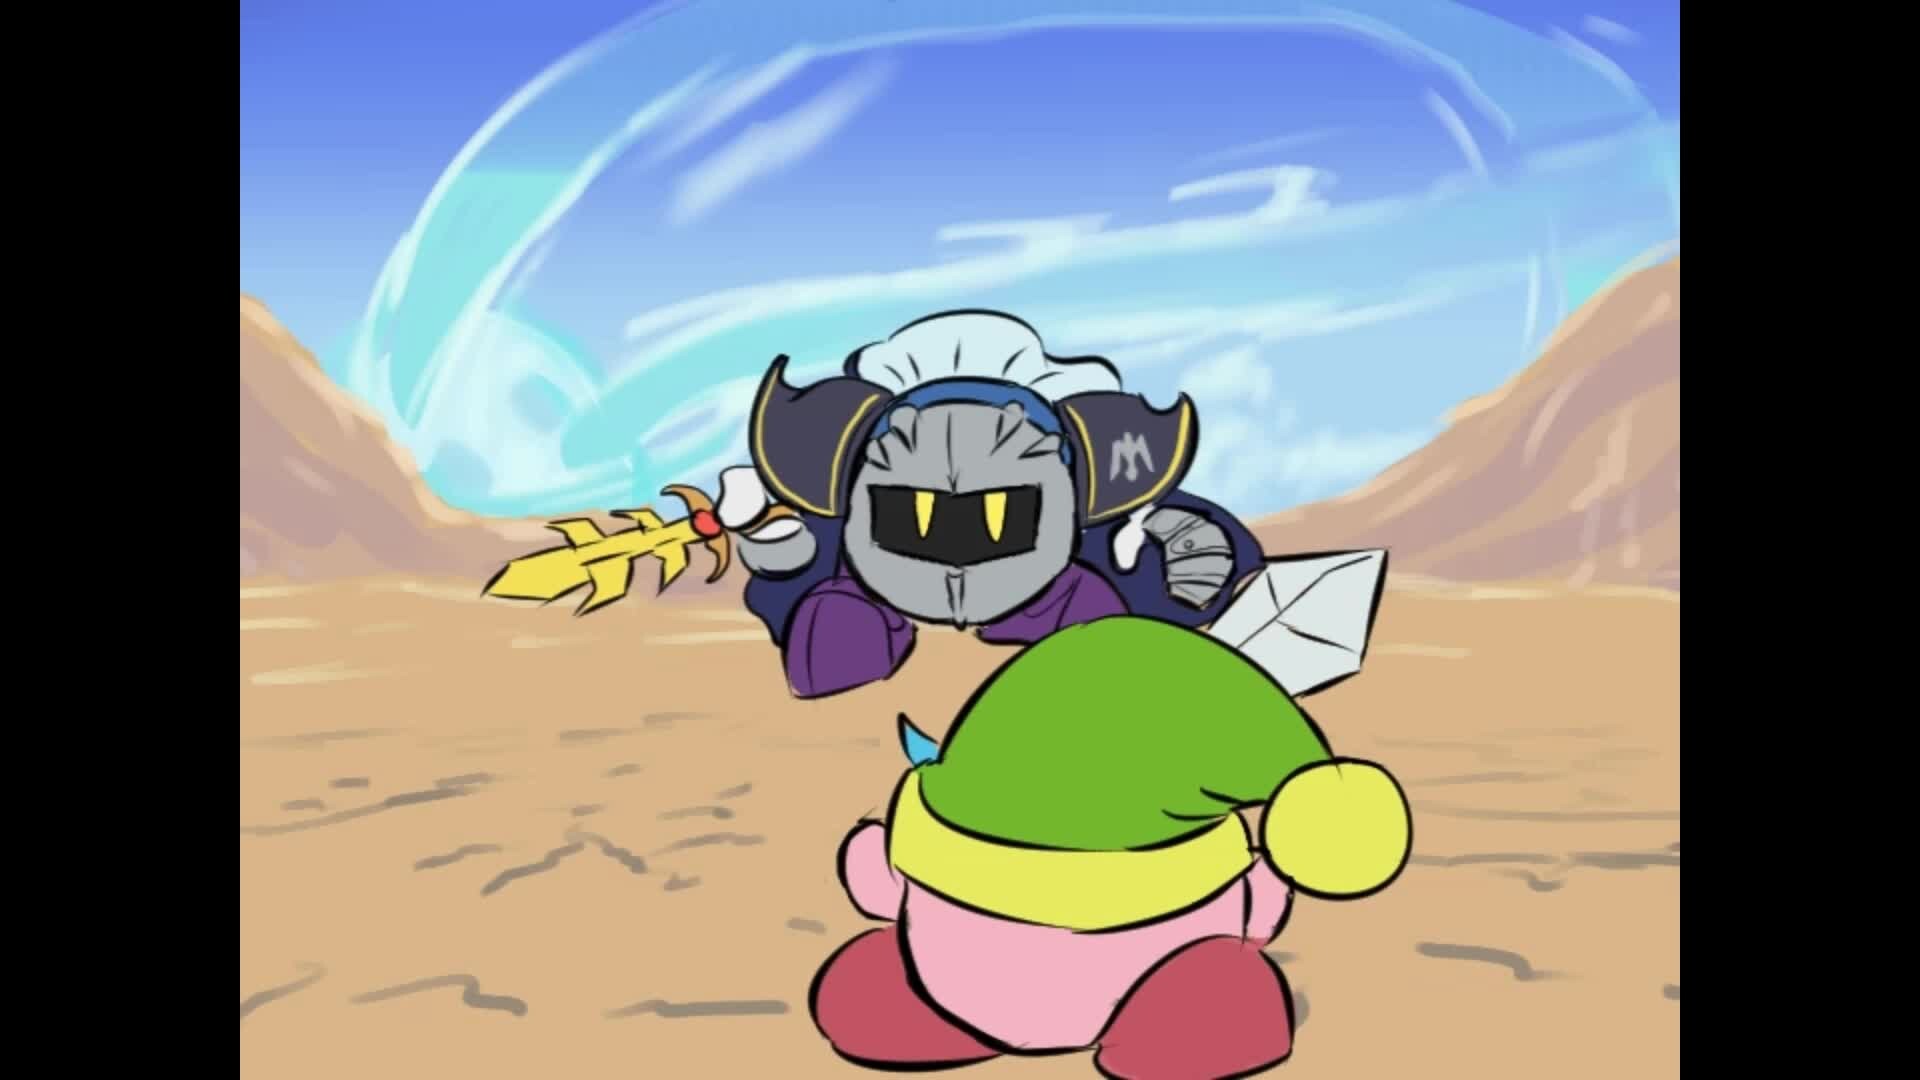 Meta knight “Kirby right back at ya”